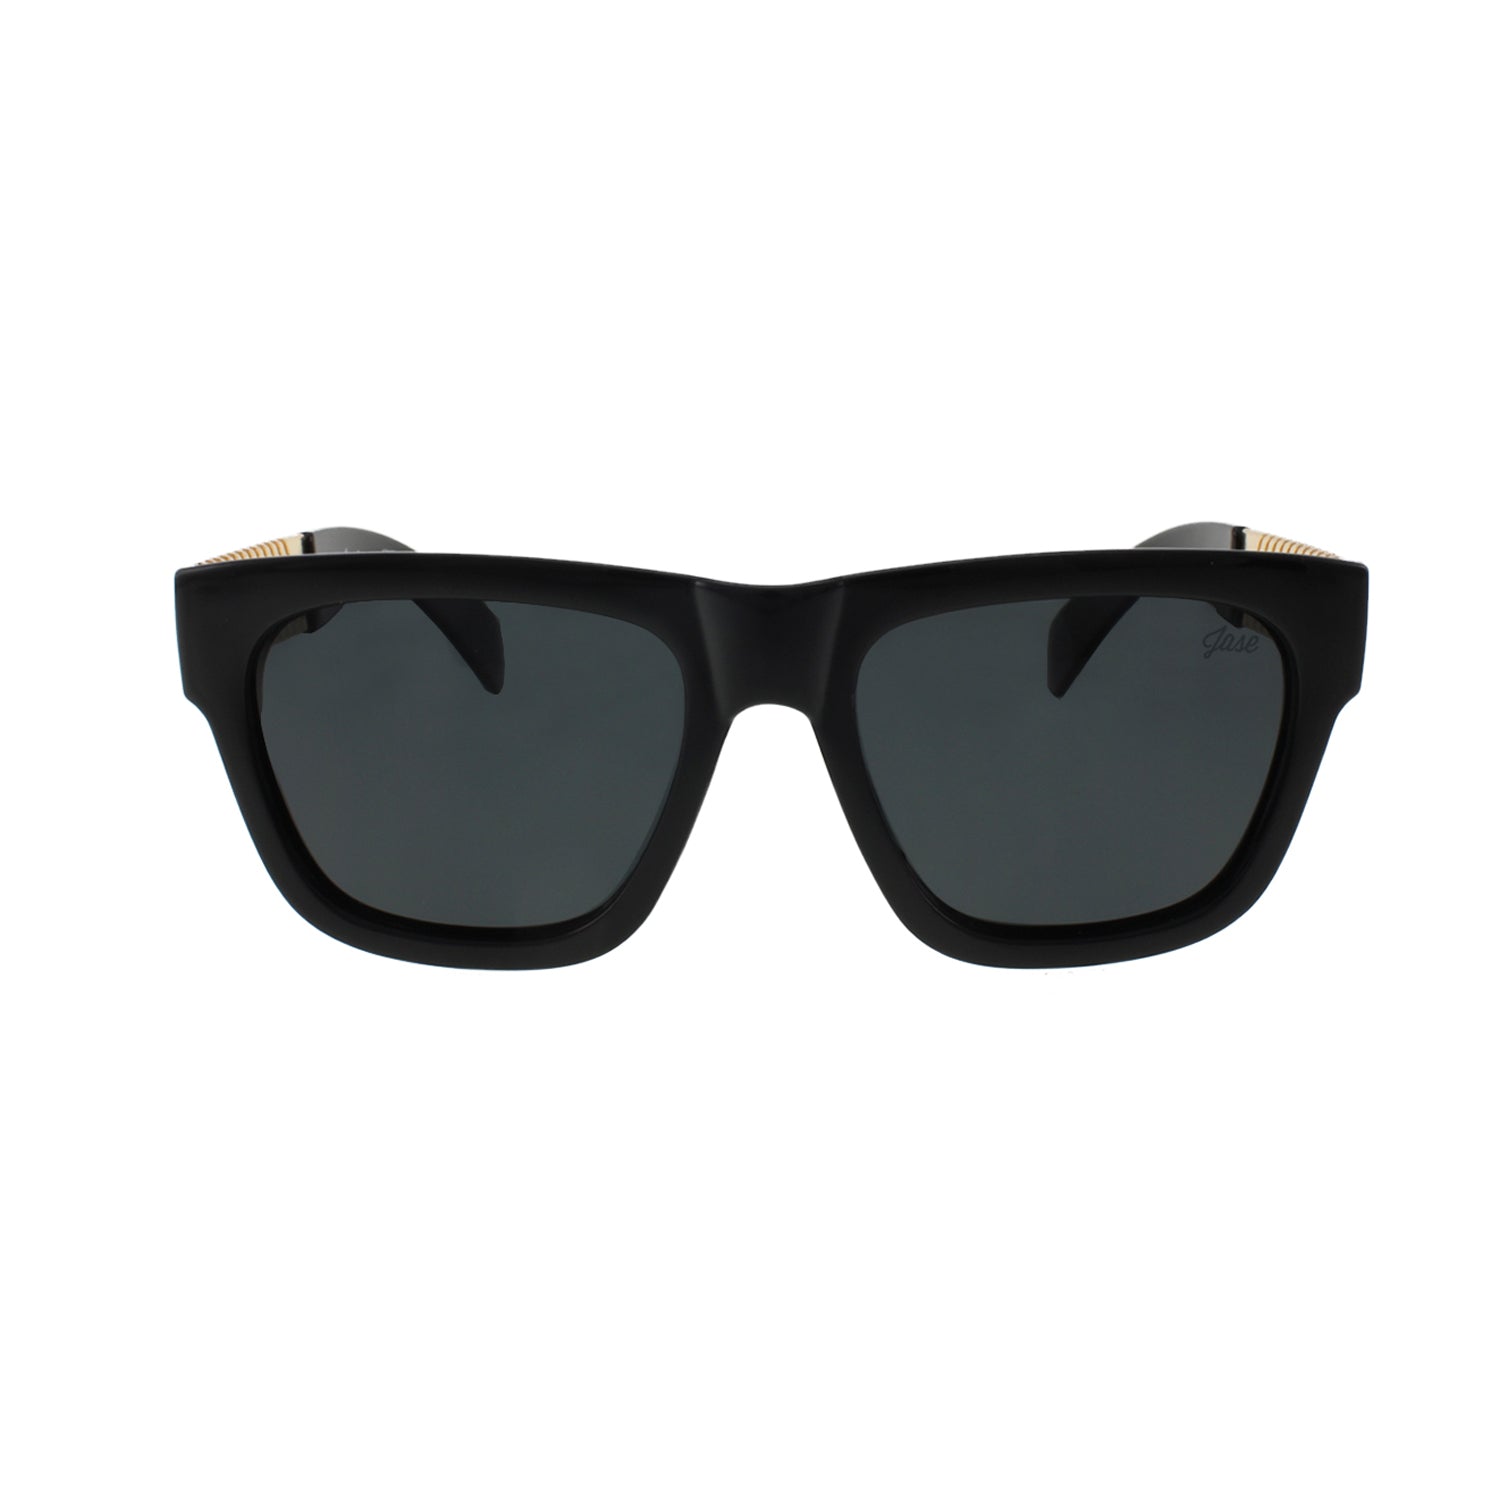 Jase New York Royce Sunglasses in Gloss Black